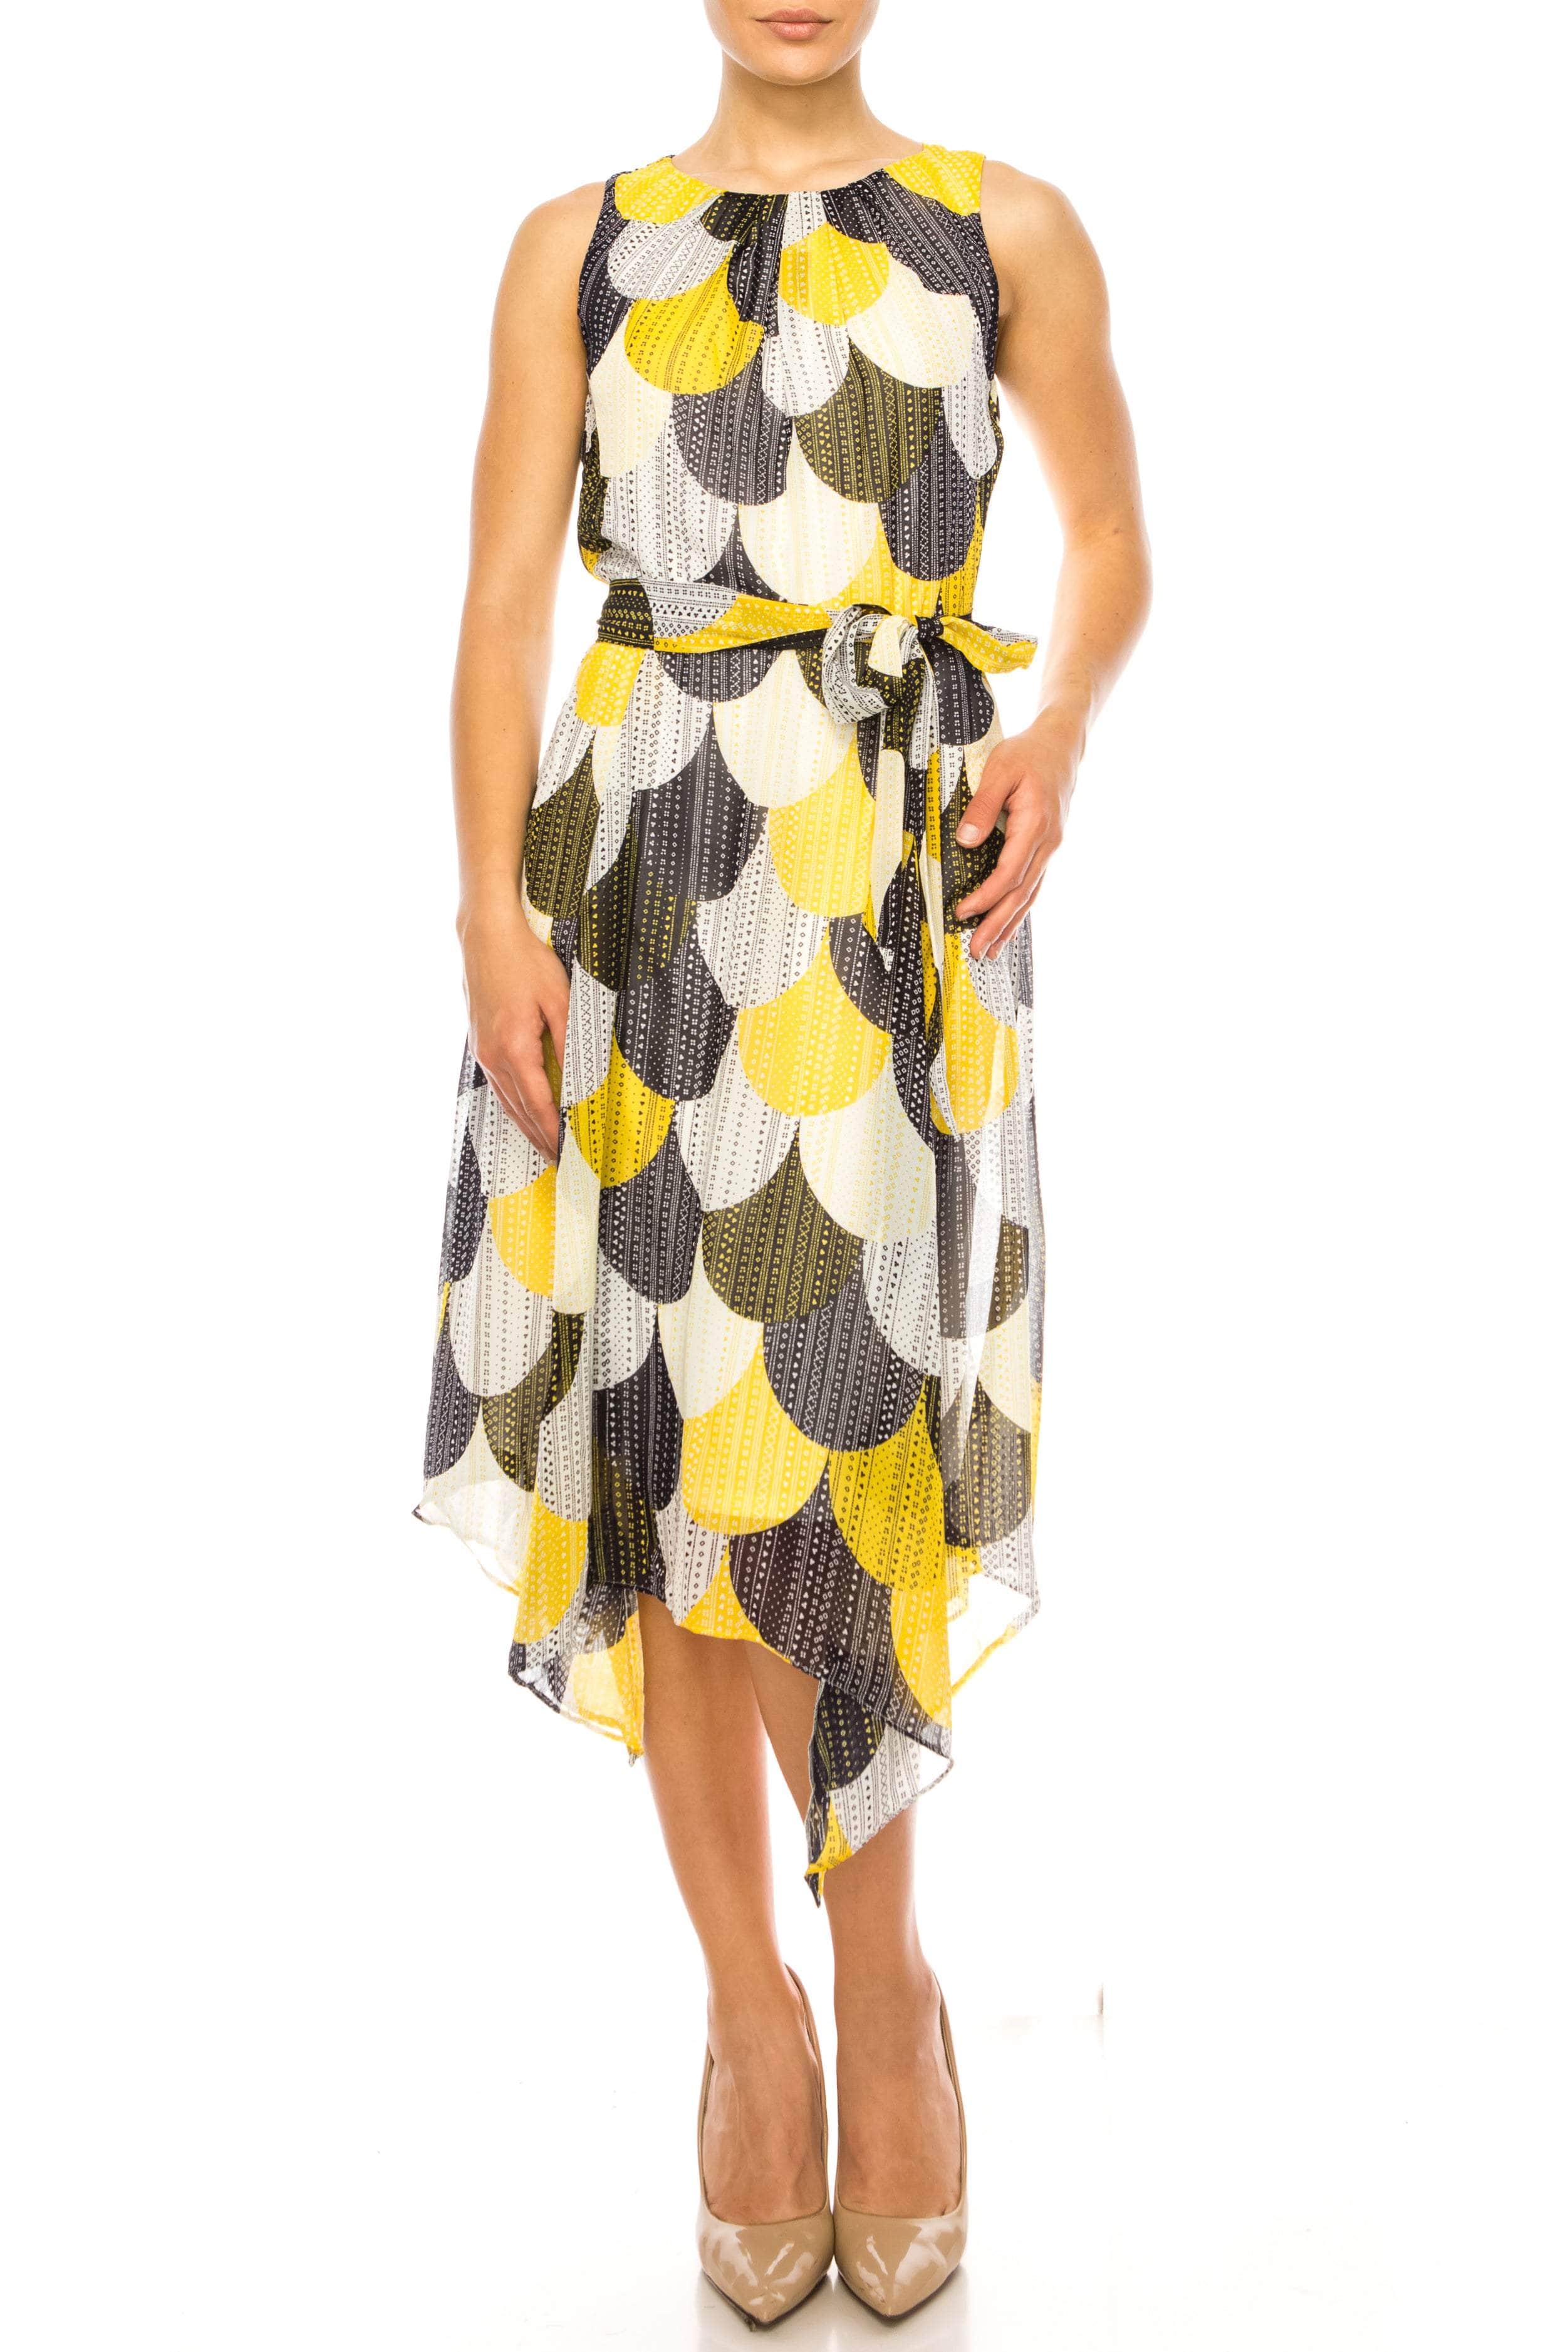 ILE Clothing CHP350 - Jewel Neck Floral Dress
